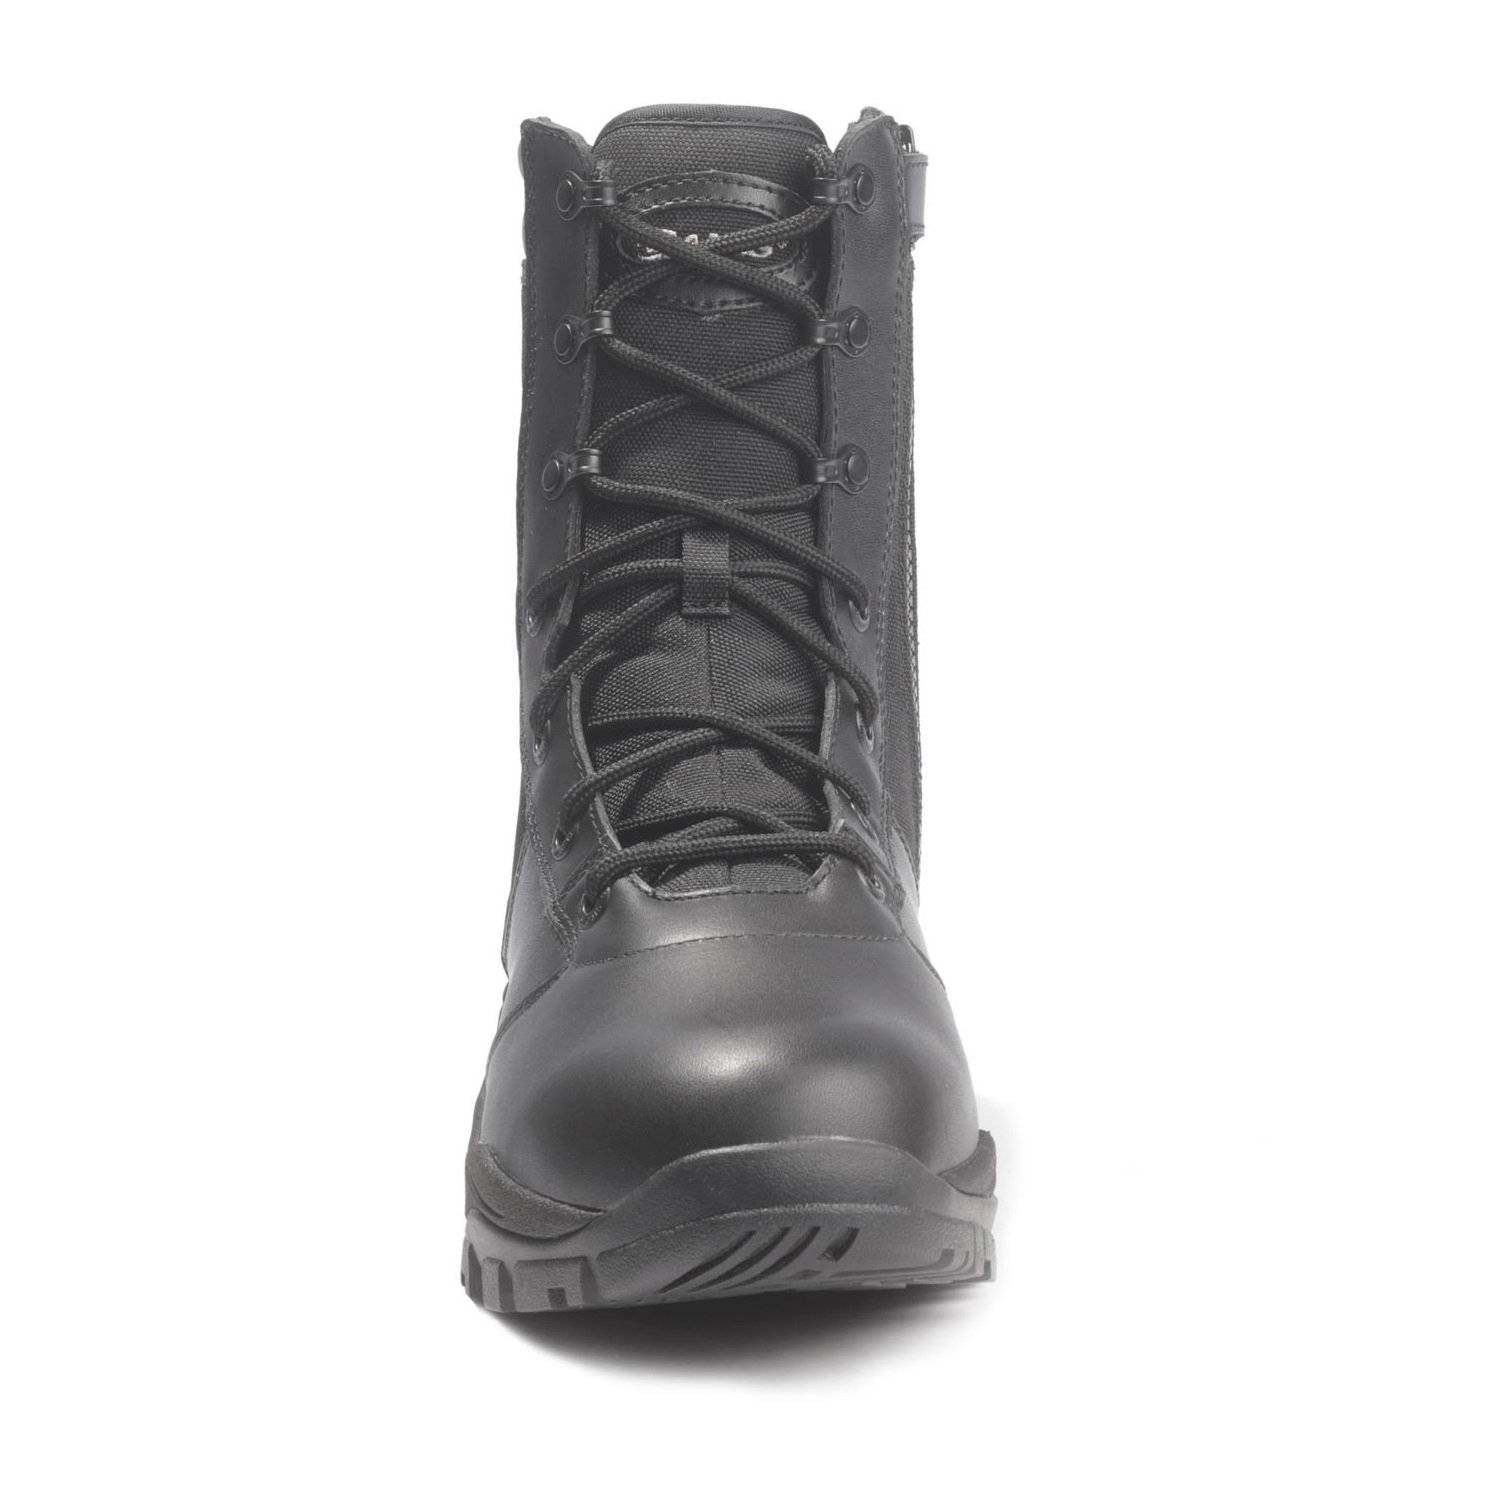 Galls Men’s 8” Side Zip Boots | Duty Boots